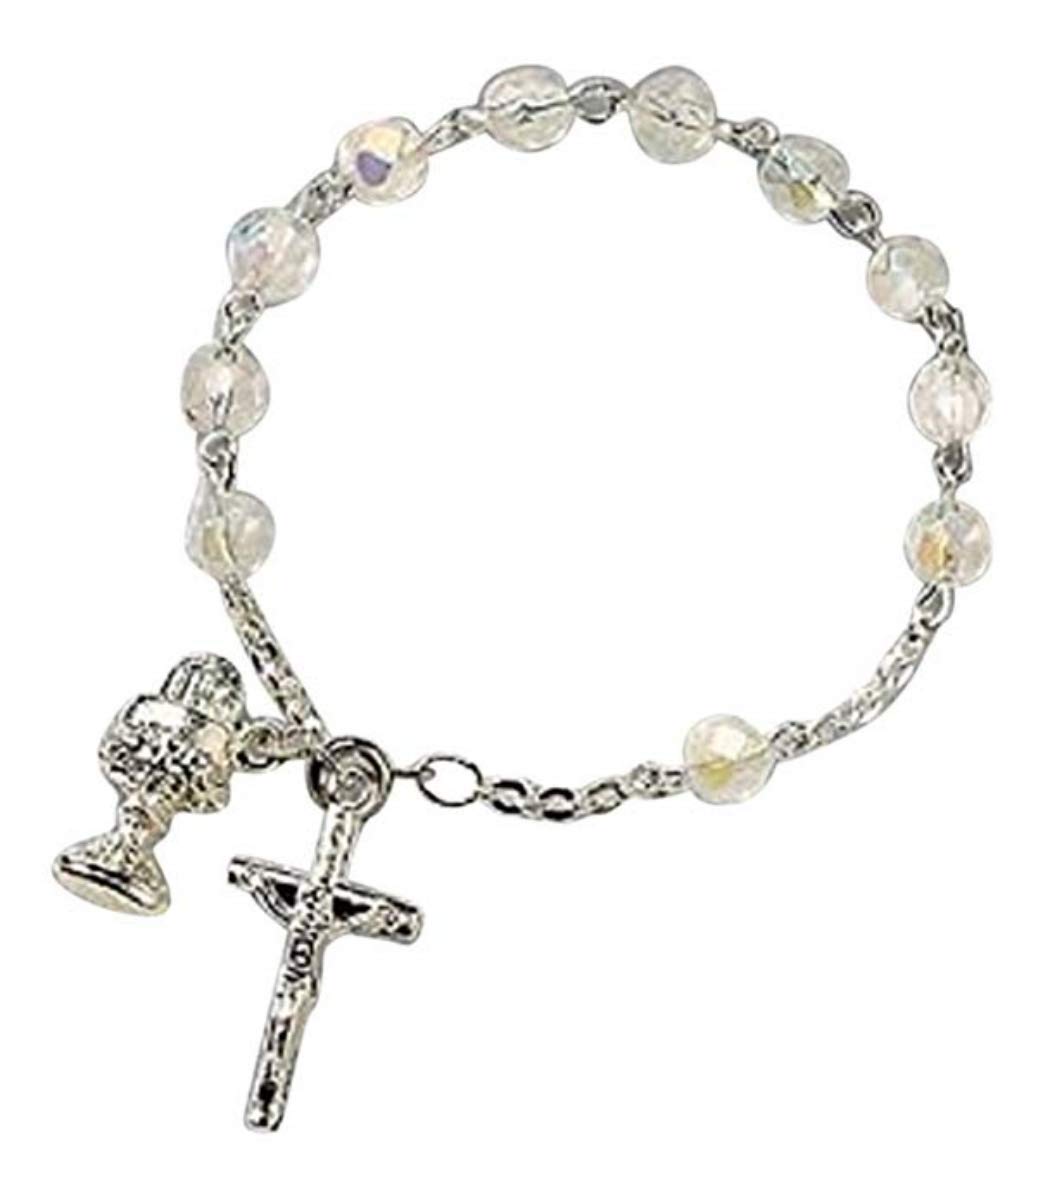 My First Communion Godparent Gift, Rosary Bracelet for Catholic Girls, Women, 7 Inch